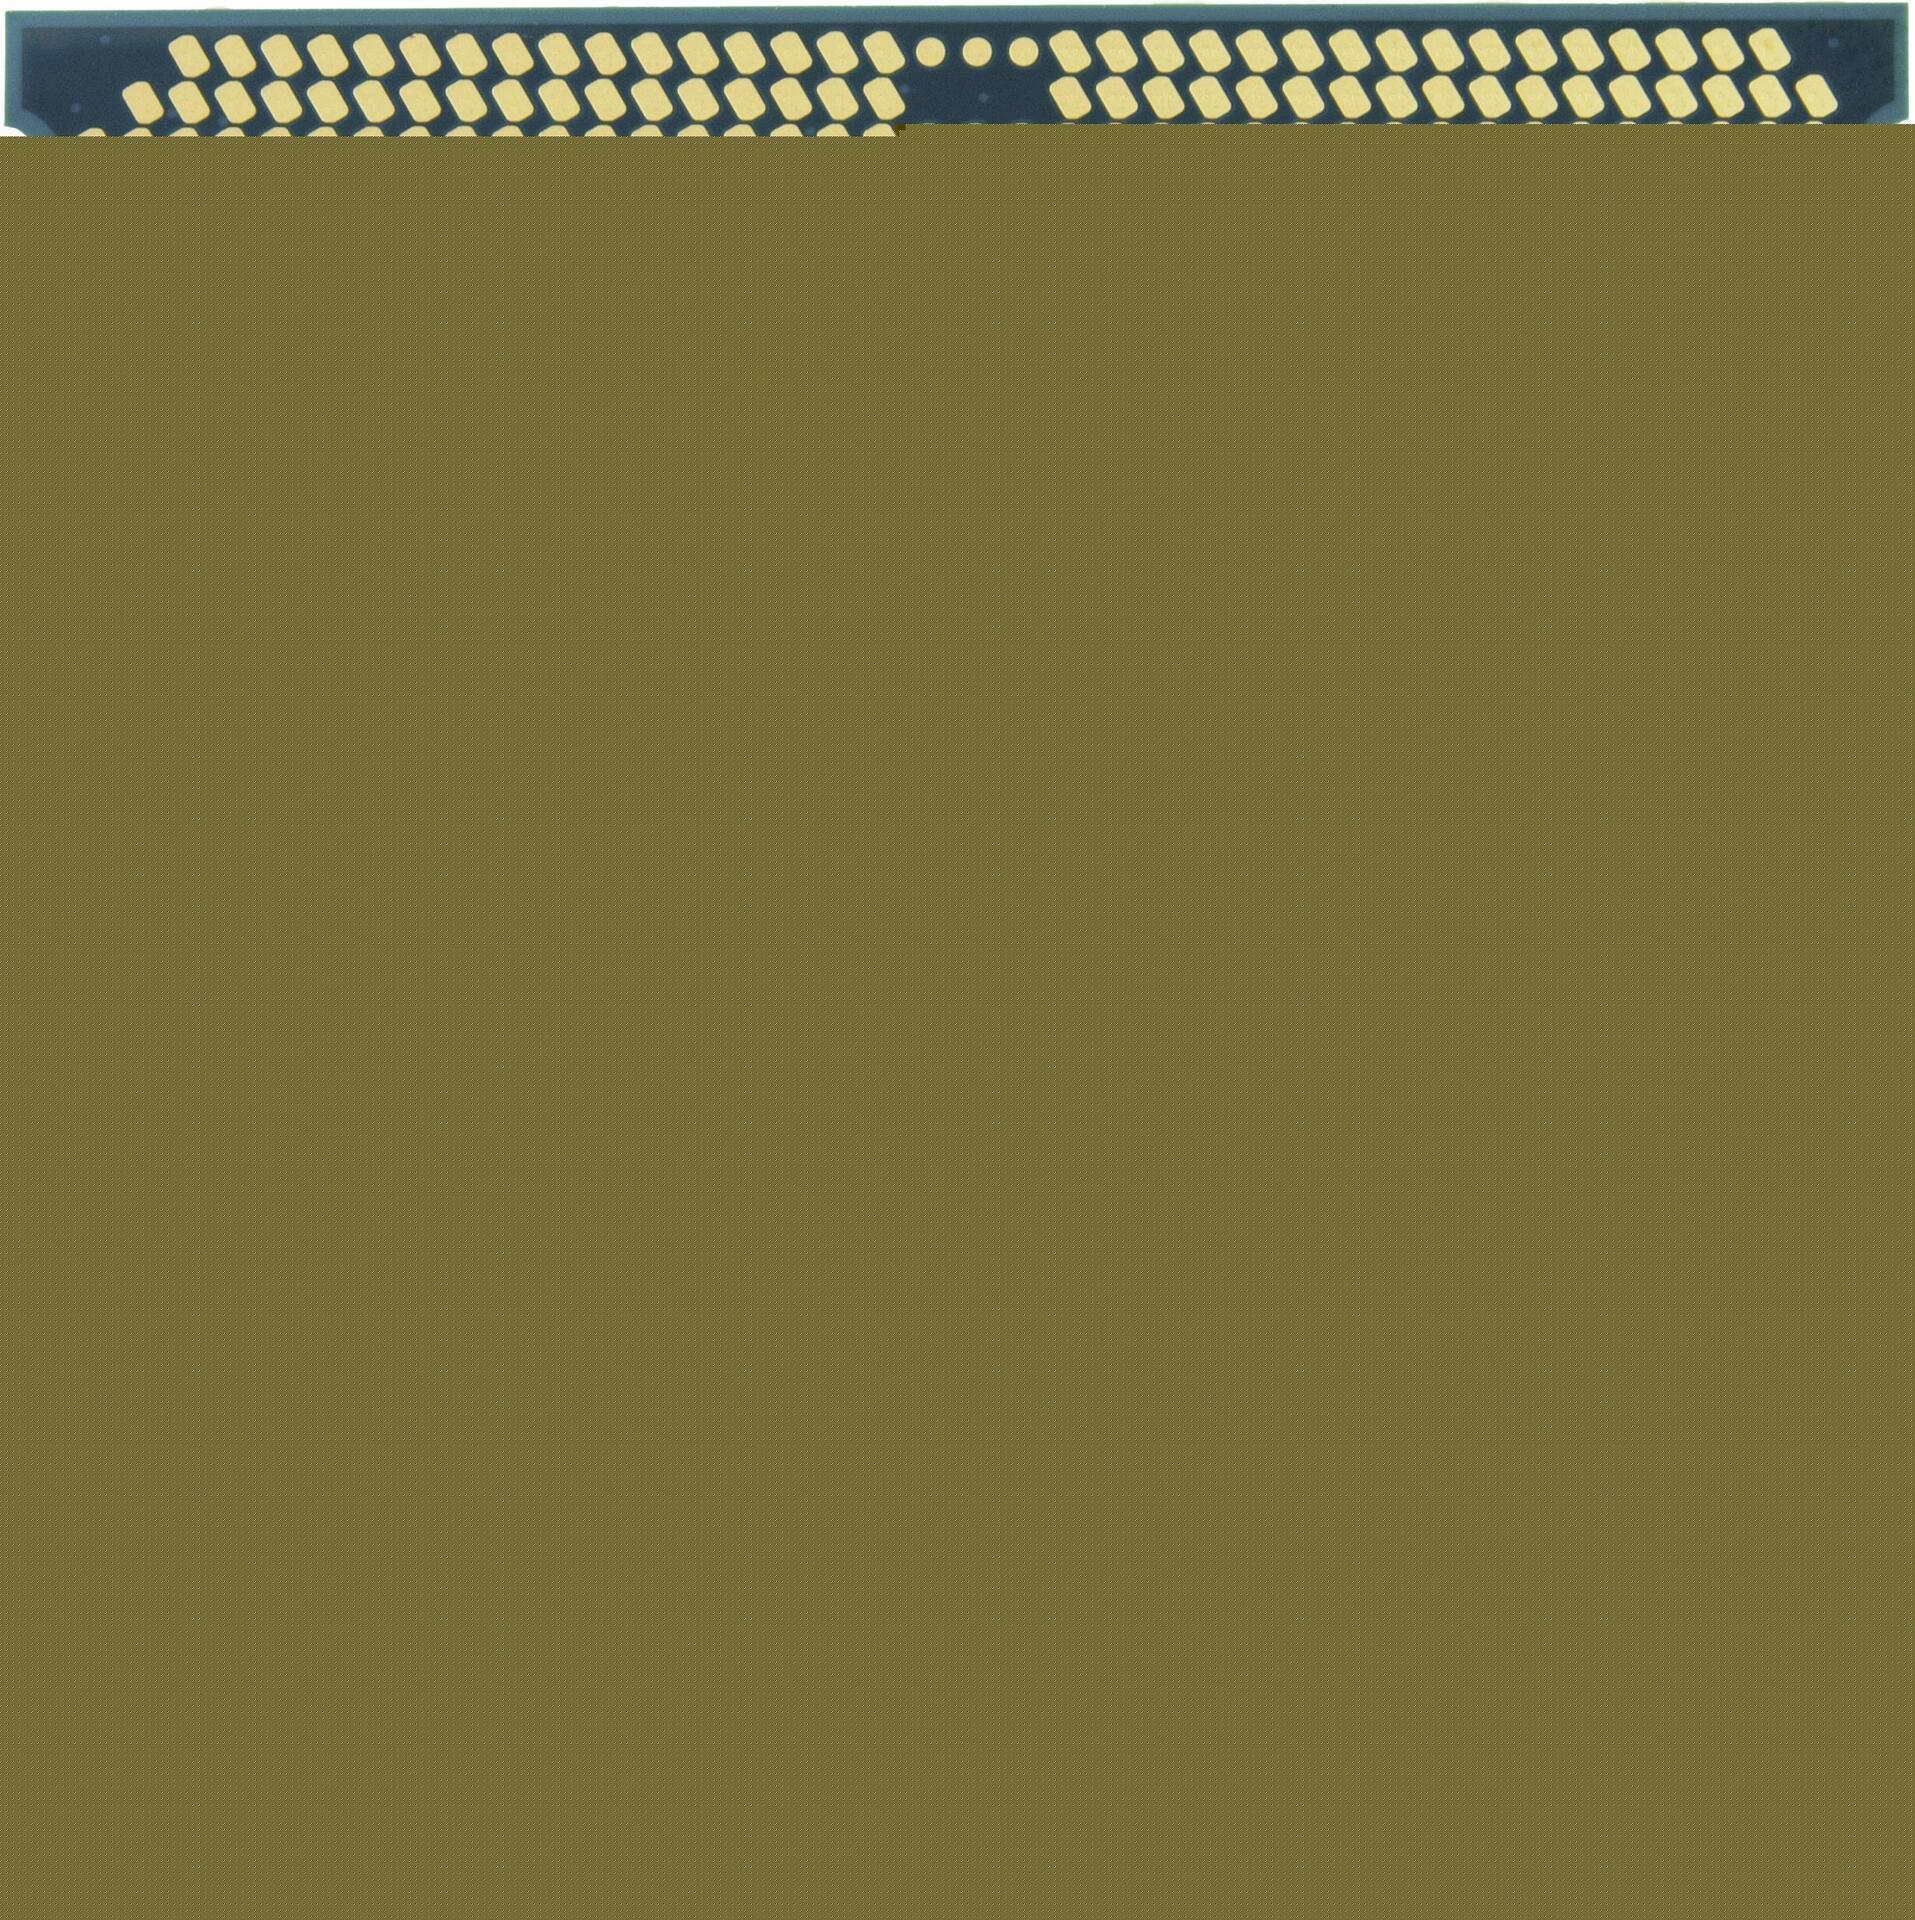 INTEL CPU/Xeon E-2286G 4.00GHz LGA1151 Tray